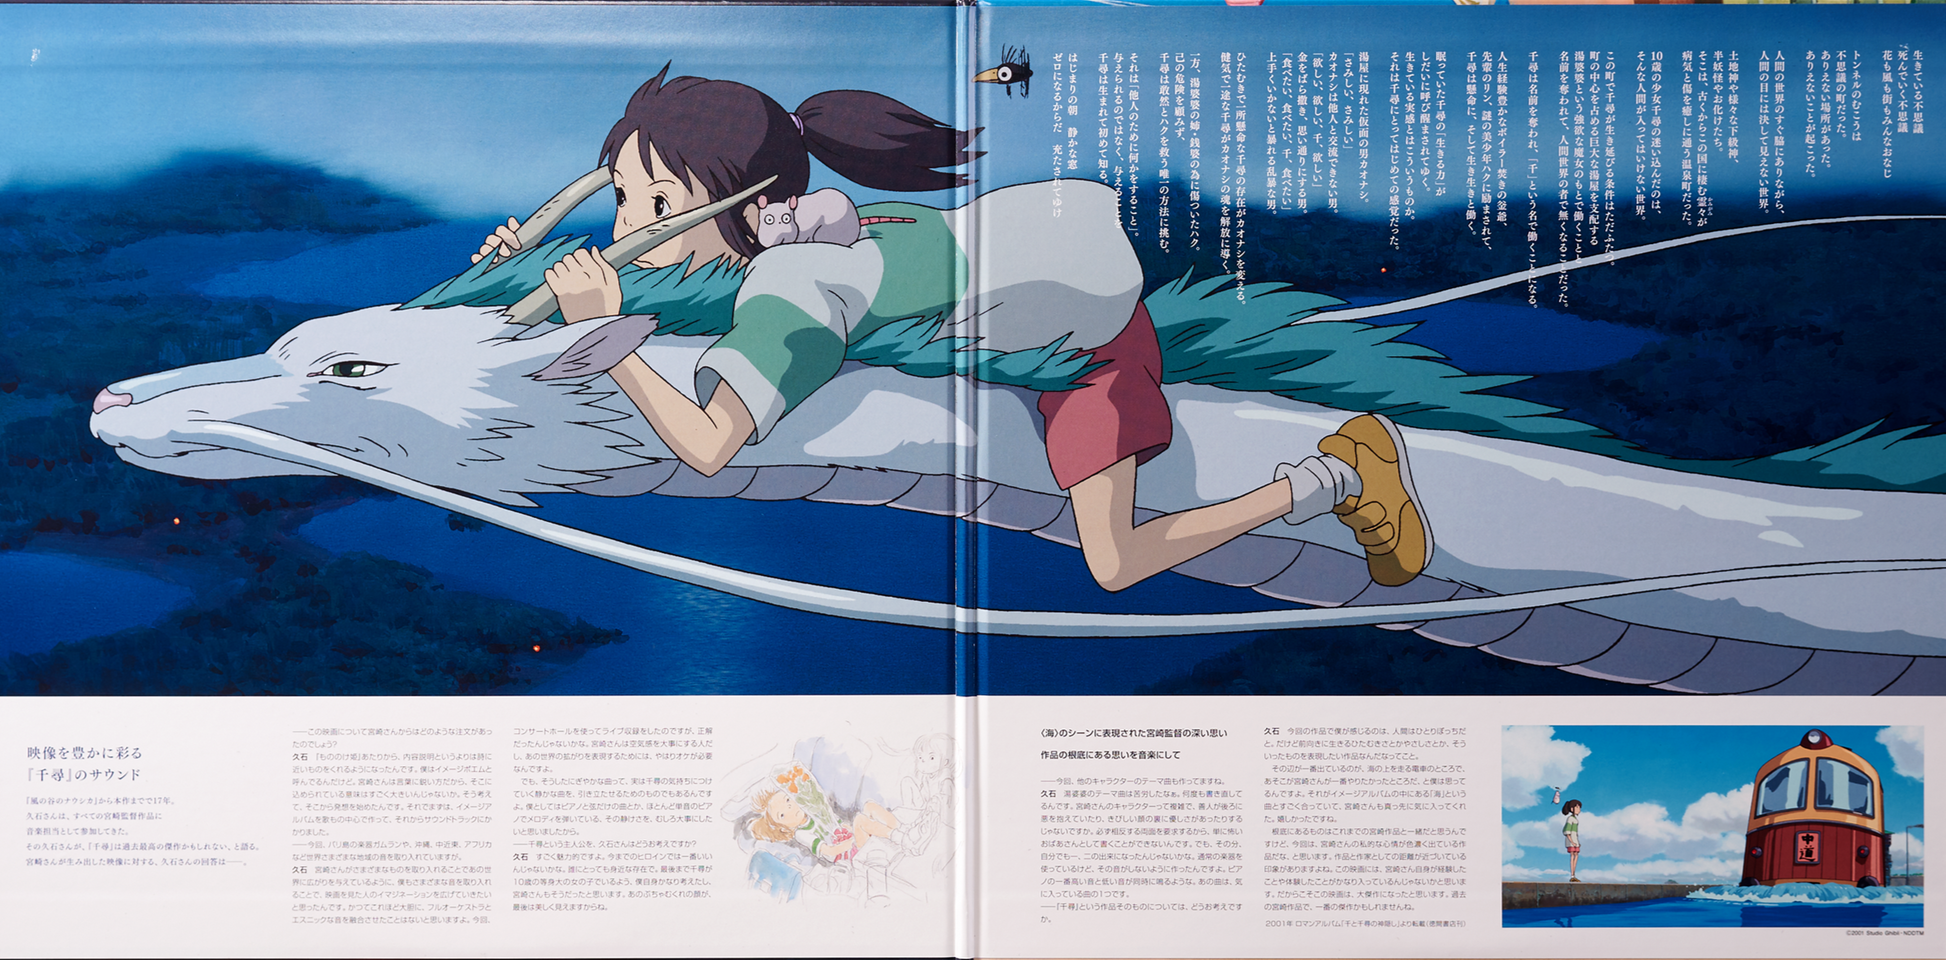 Studio Ghibli Vinyl -  New Zealand